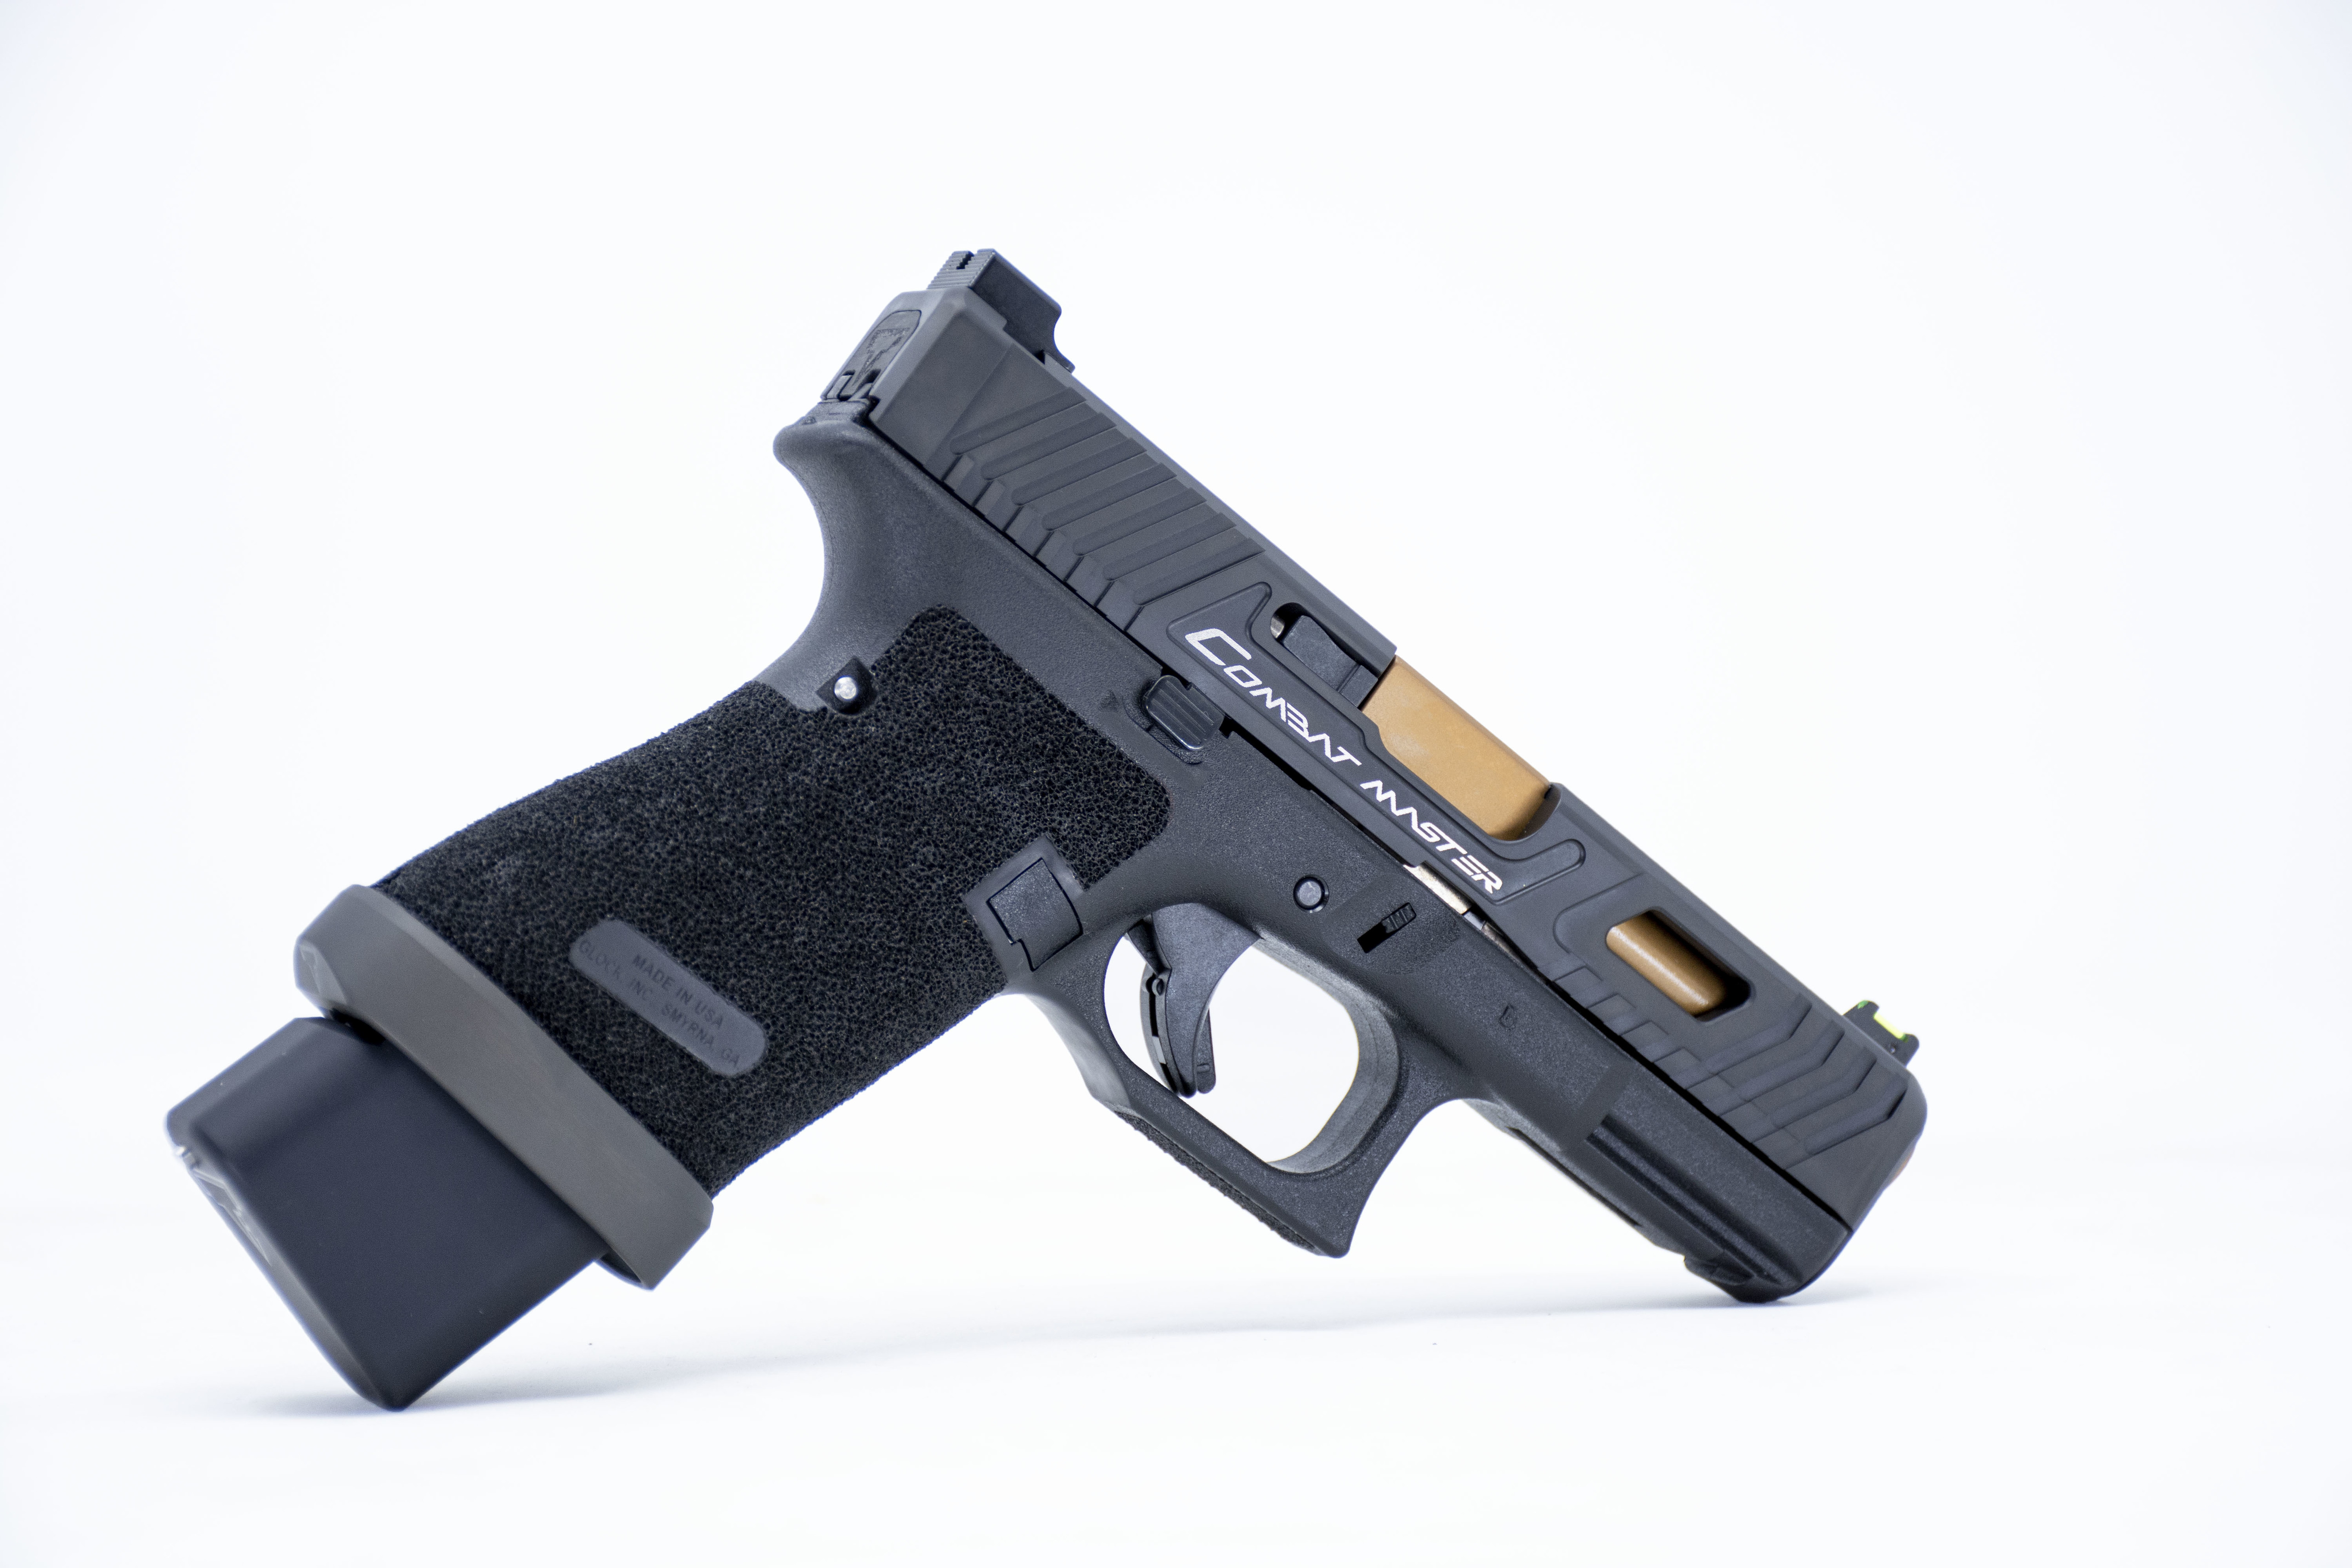 Tti Carry Magwell For Glock 19 Gen5 Taran Tactical Innovations 